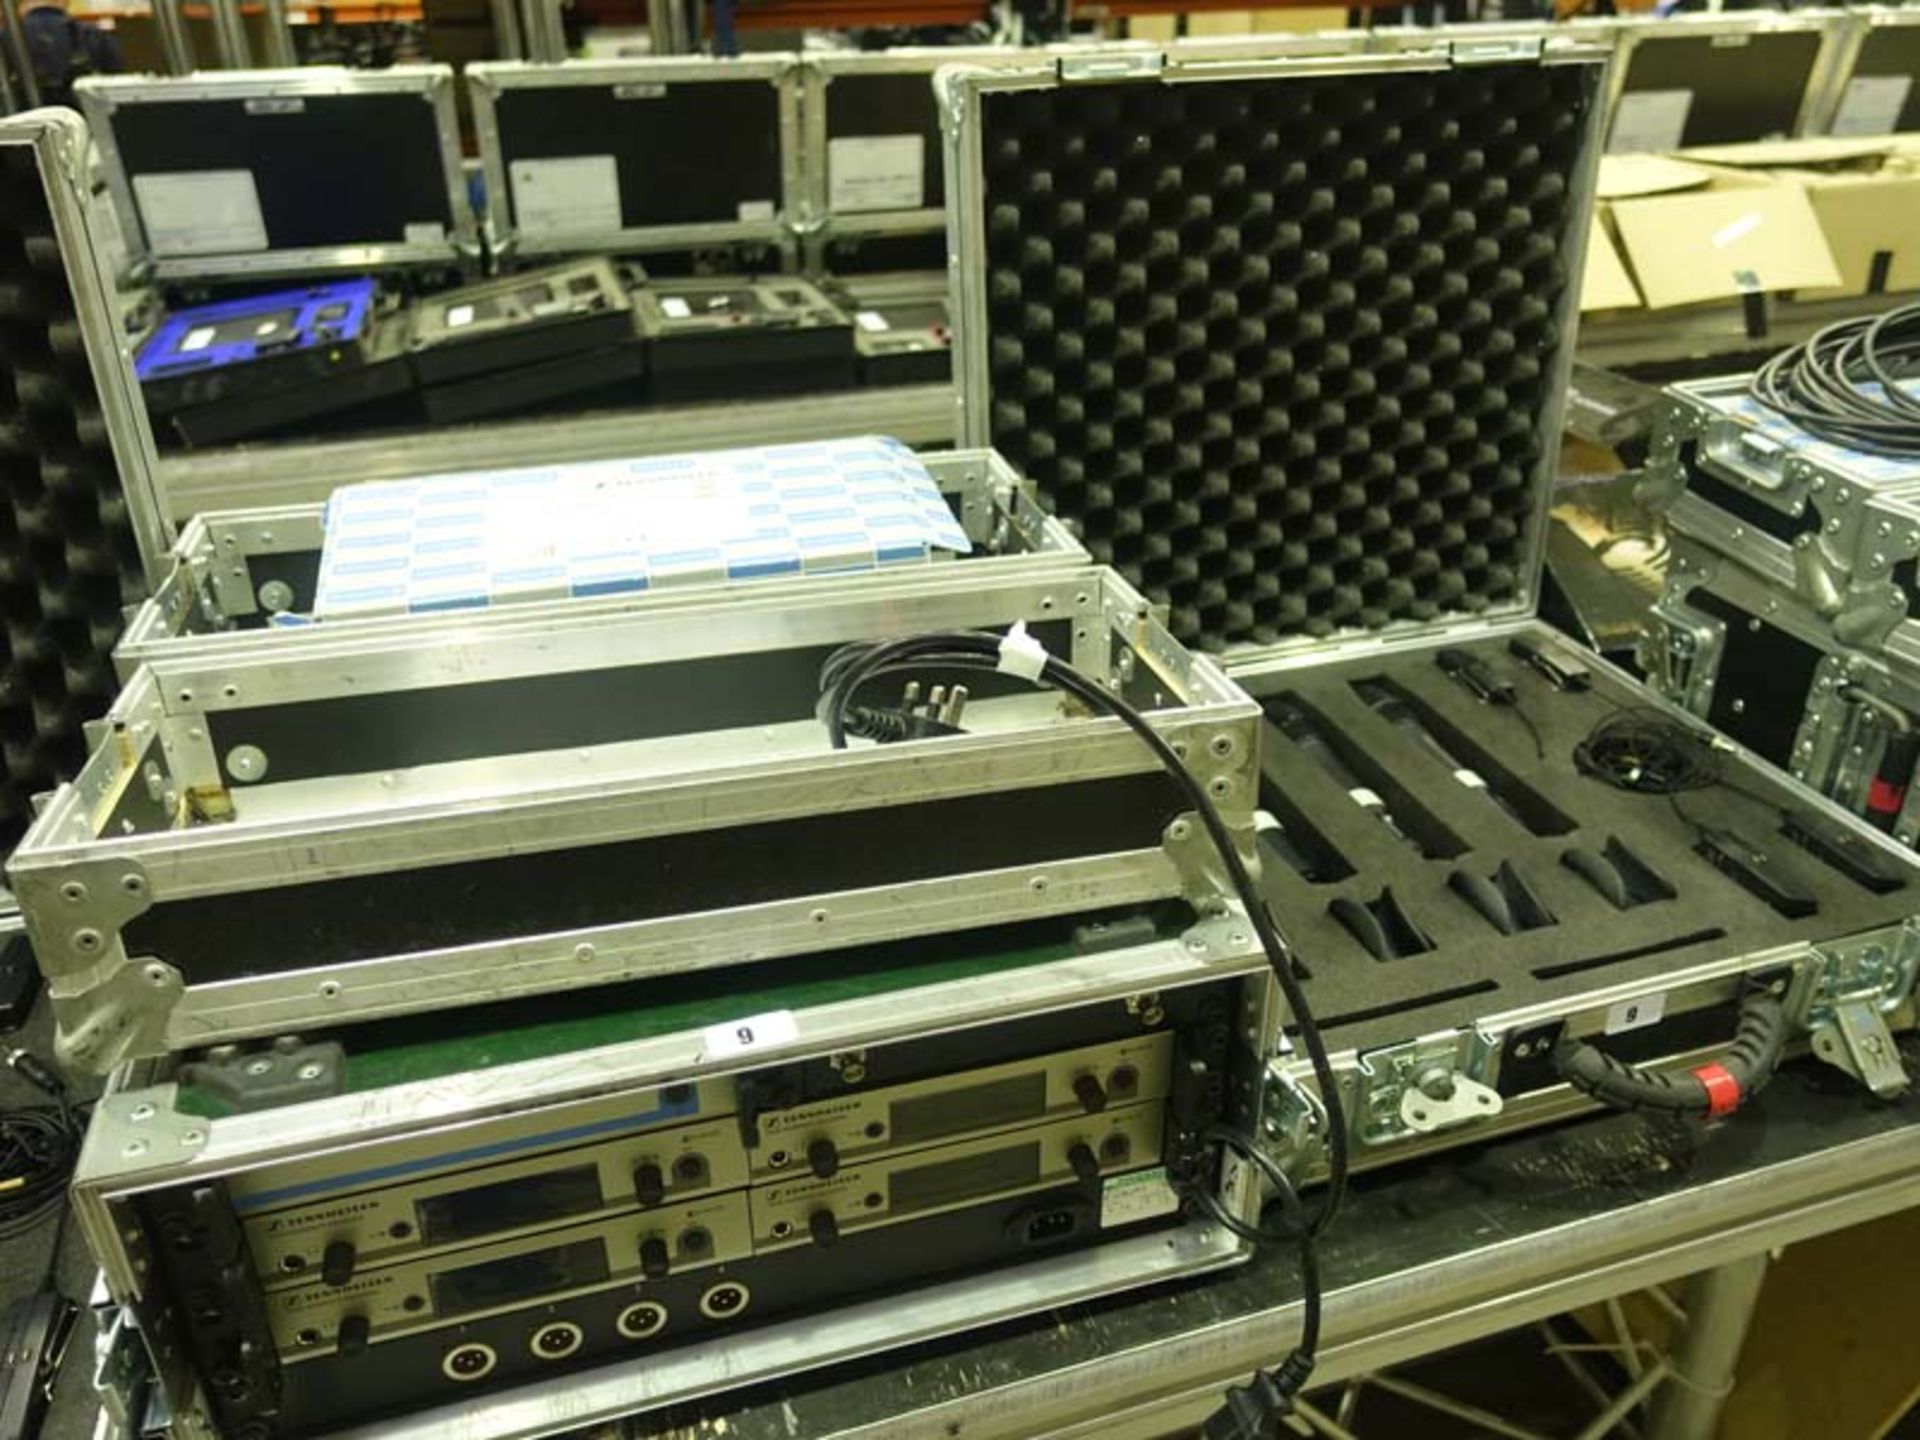 Sennheiser Quad radio mic system comprising 4 EW300G3 Diversity receivers, antenna splitter, and 4